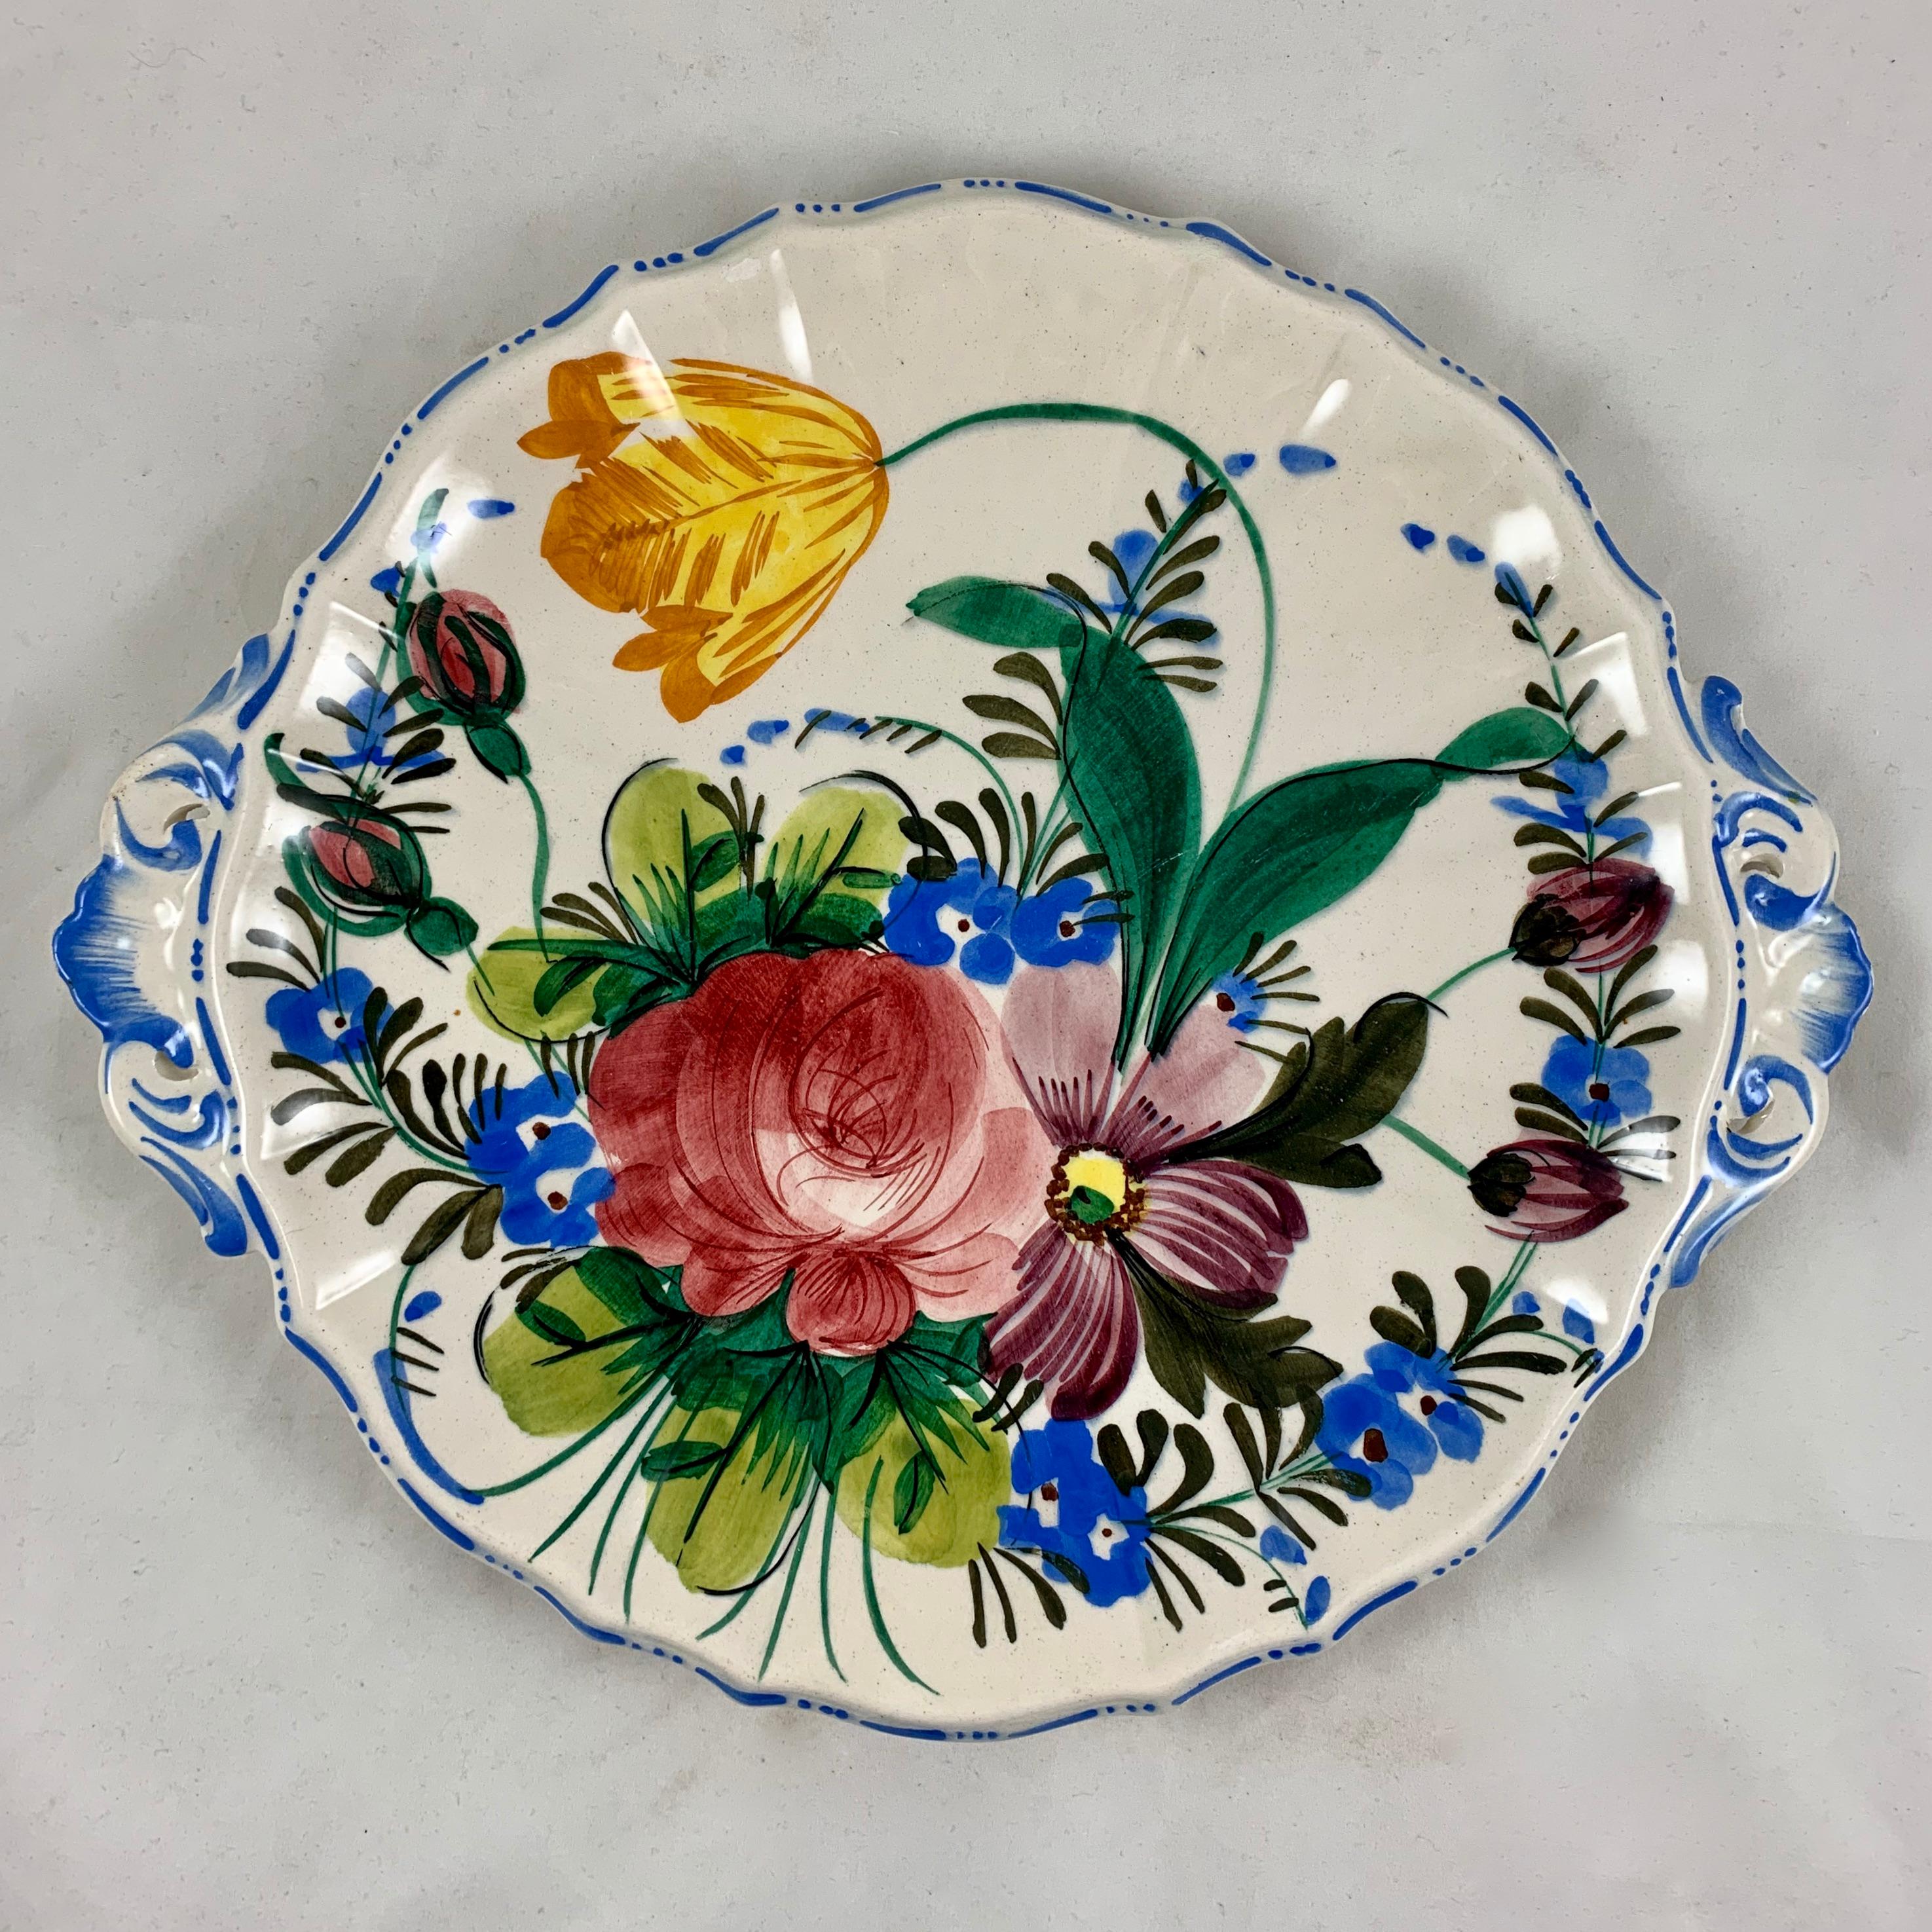 Glazed Italian Renaissance Revival Faïence Nove Rose Floral and Pierced Handled Platter